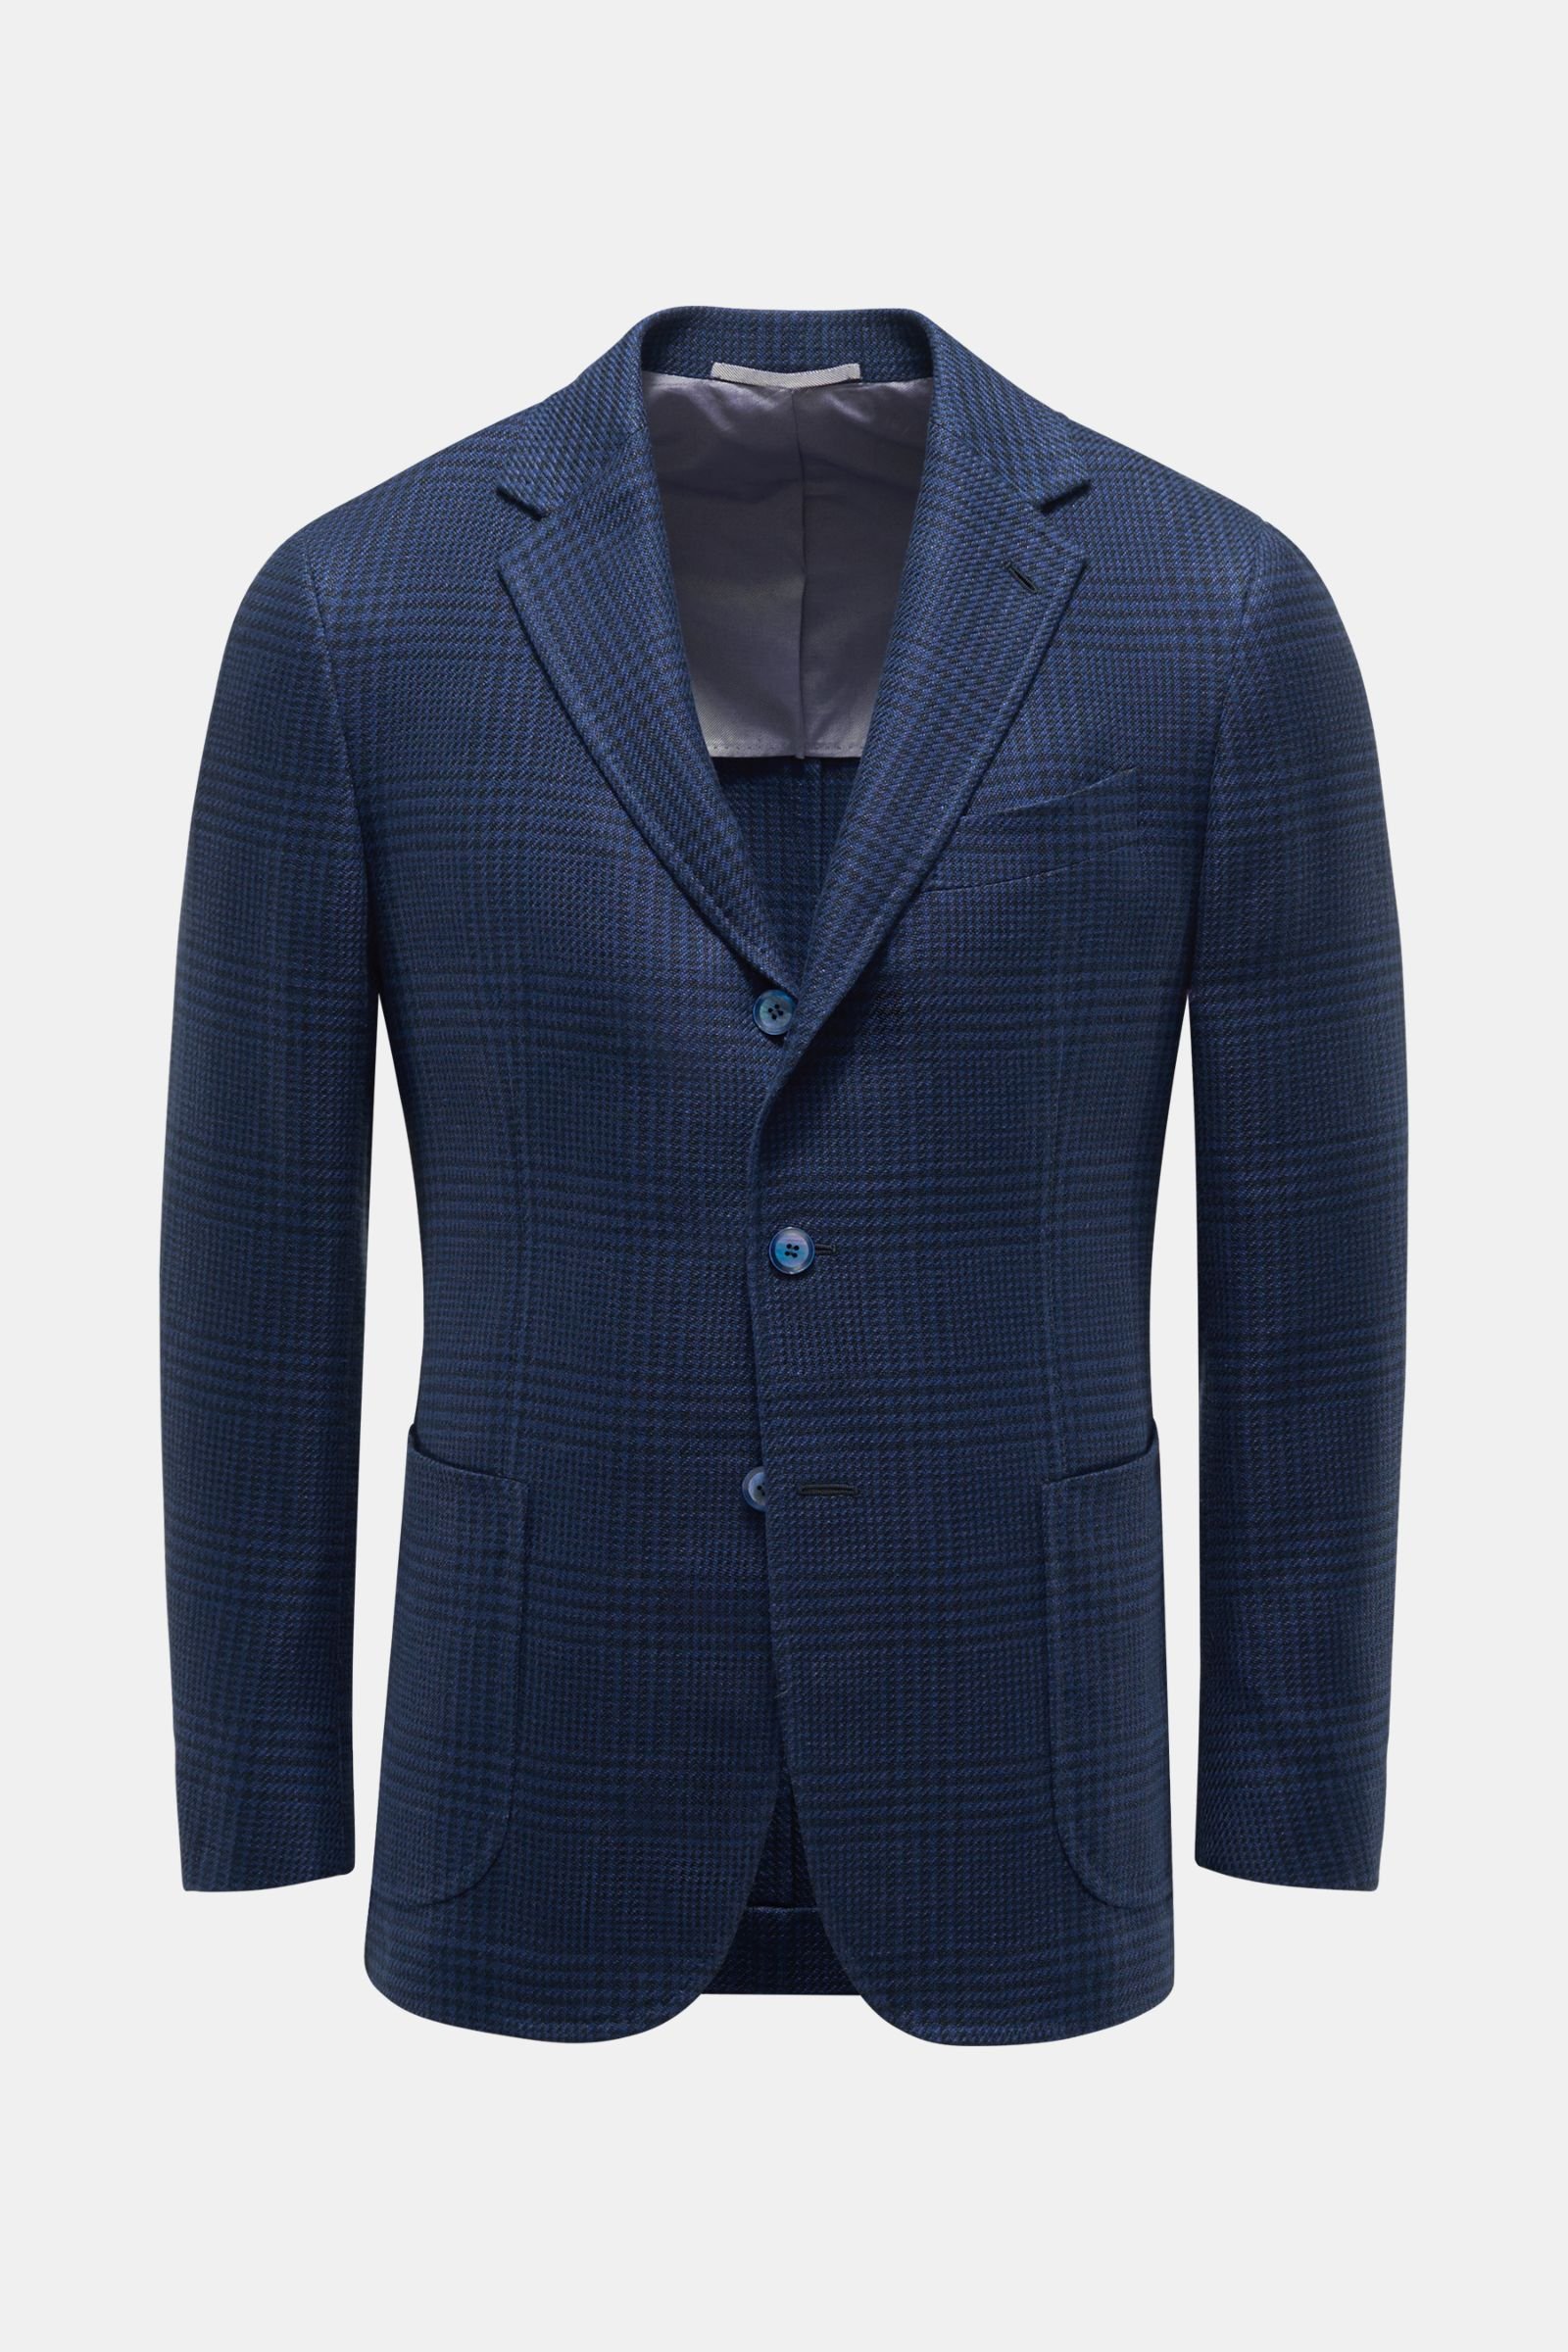 Smart-casual jacket 'Vincenzo' dark blue/black checked